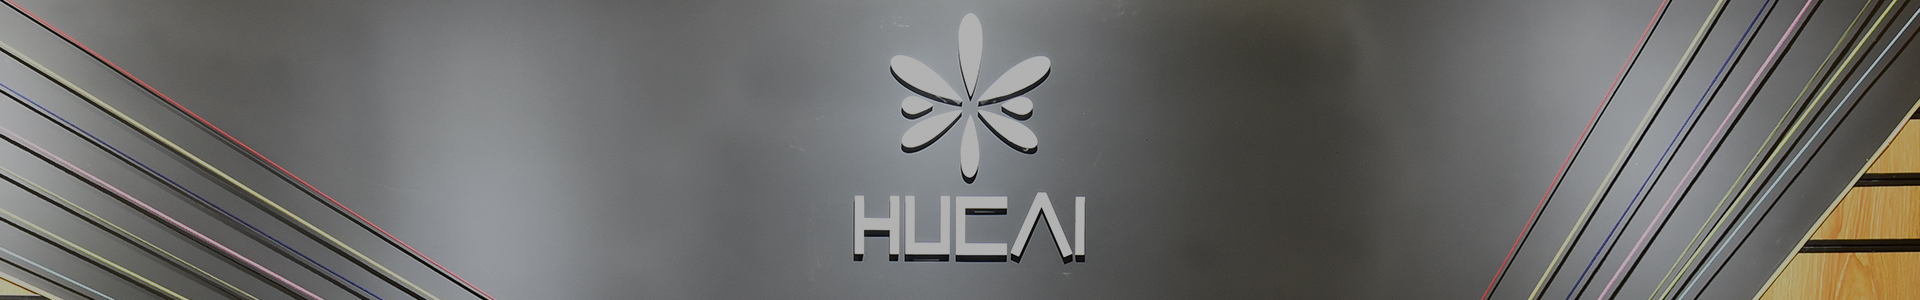 hucai sportswear manufacturer